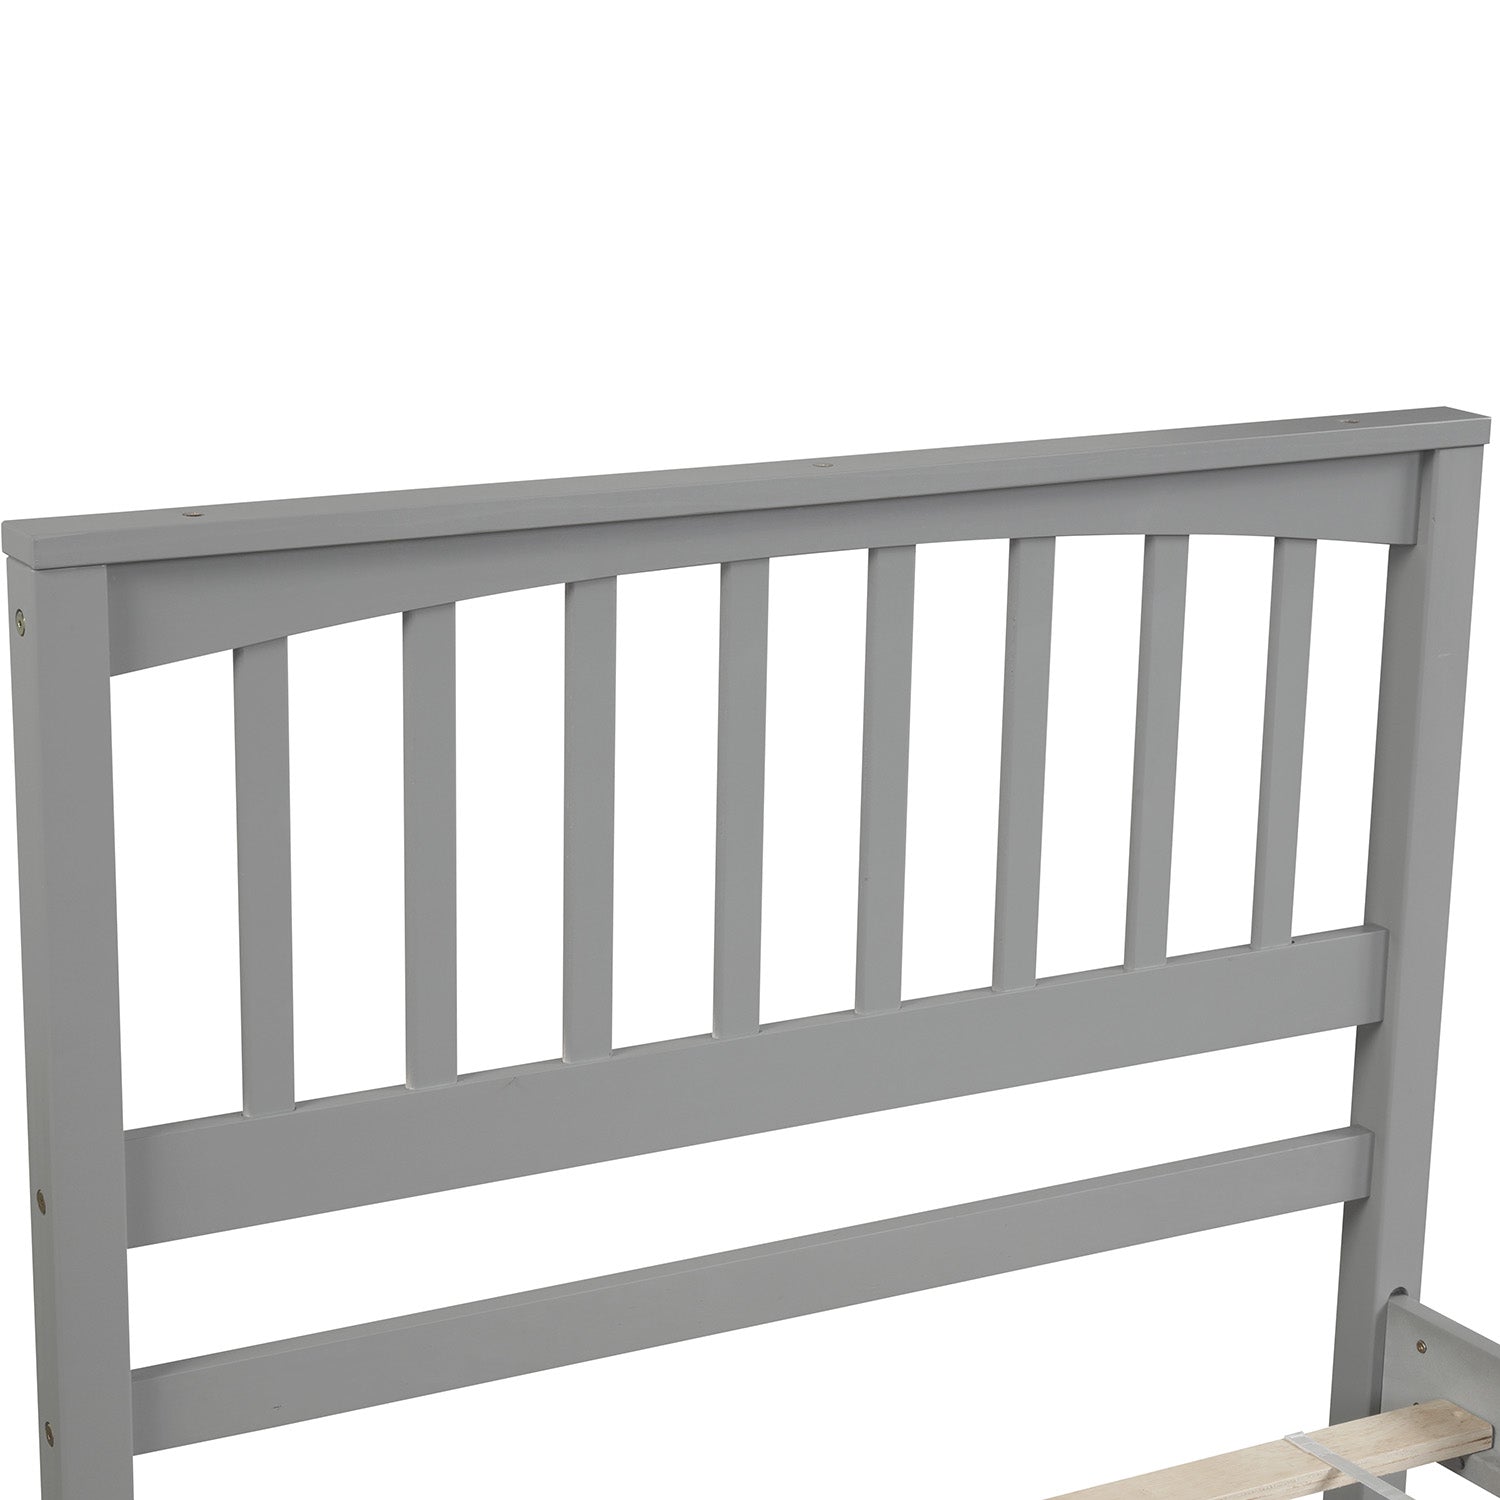 ZNTS Wood Platform Bed Twin size Platform Bed, Gray WF195377AAE